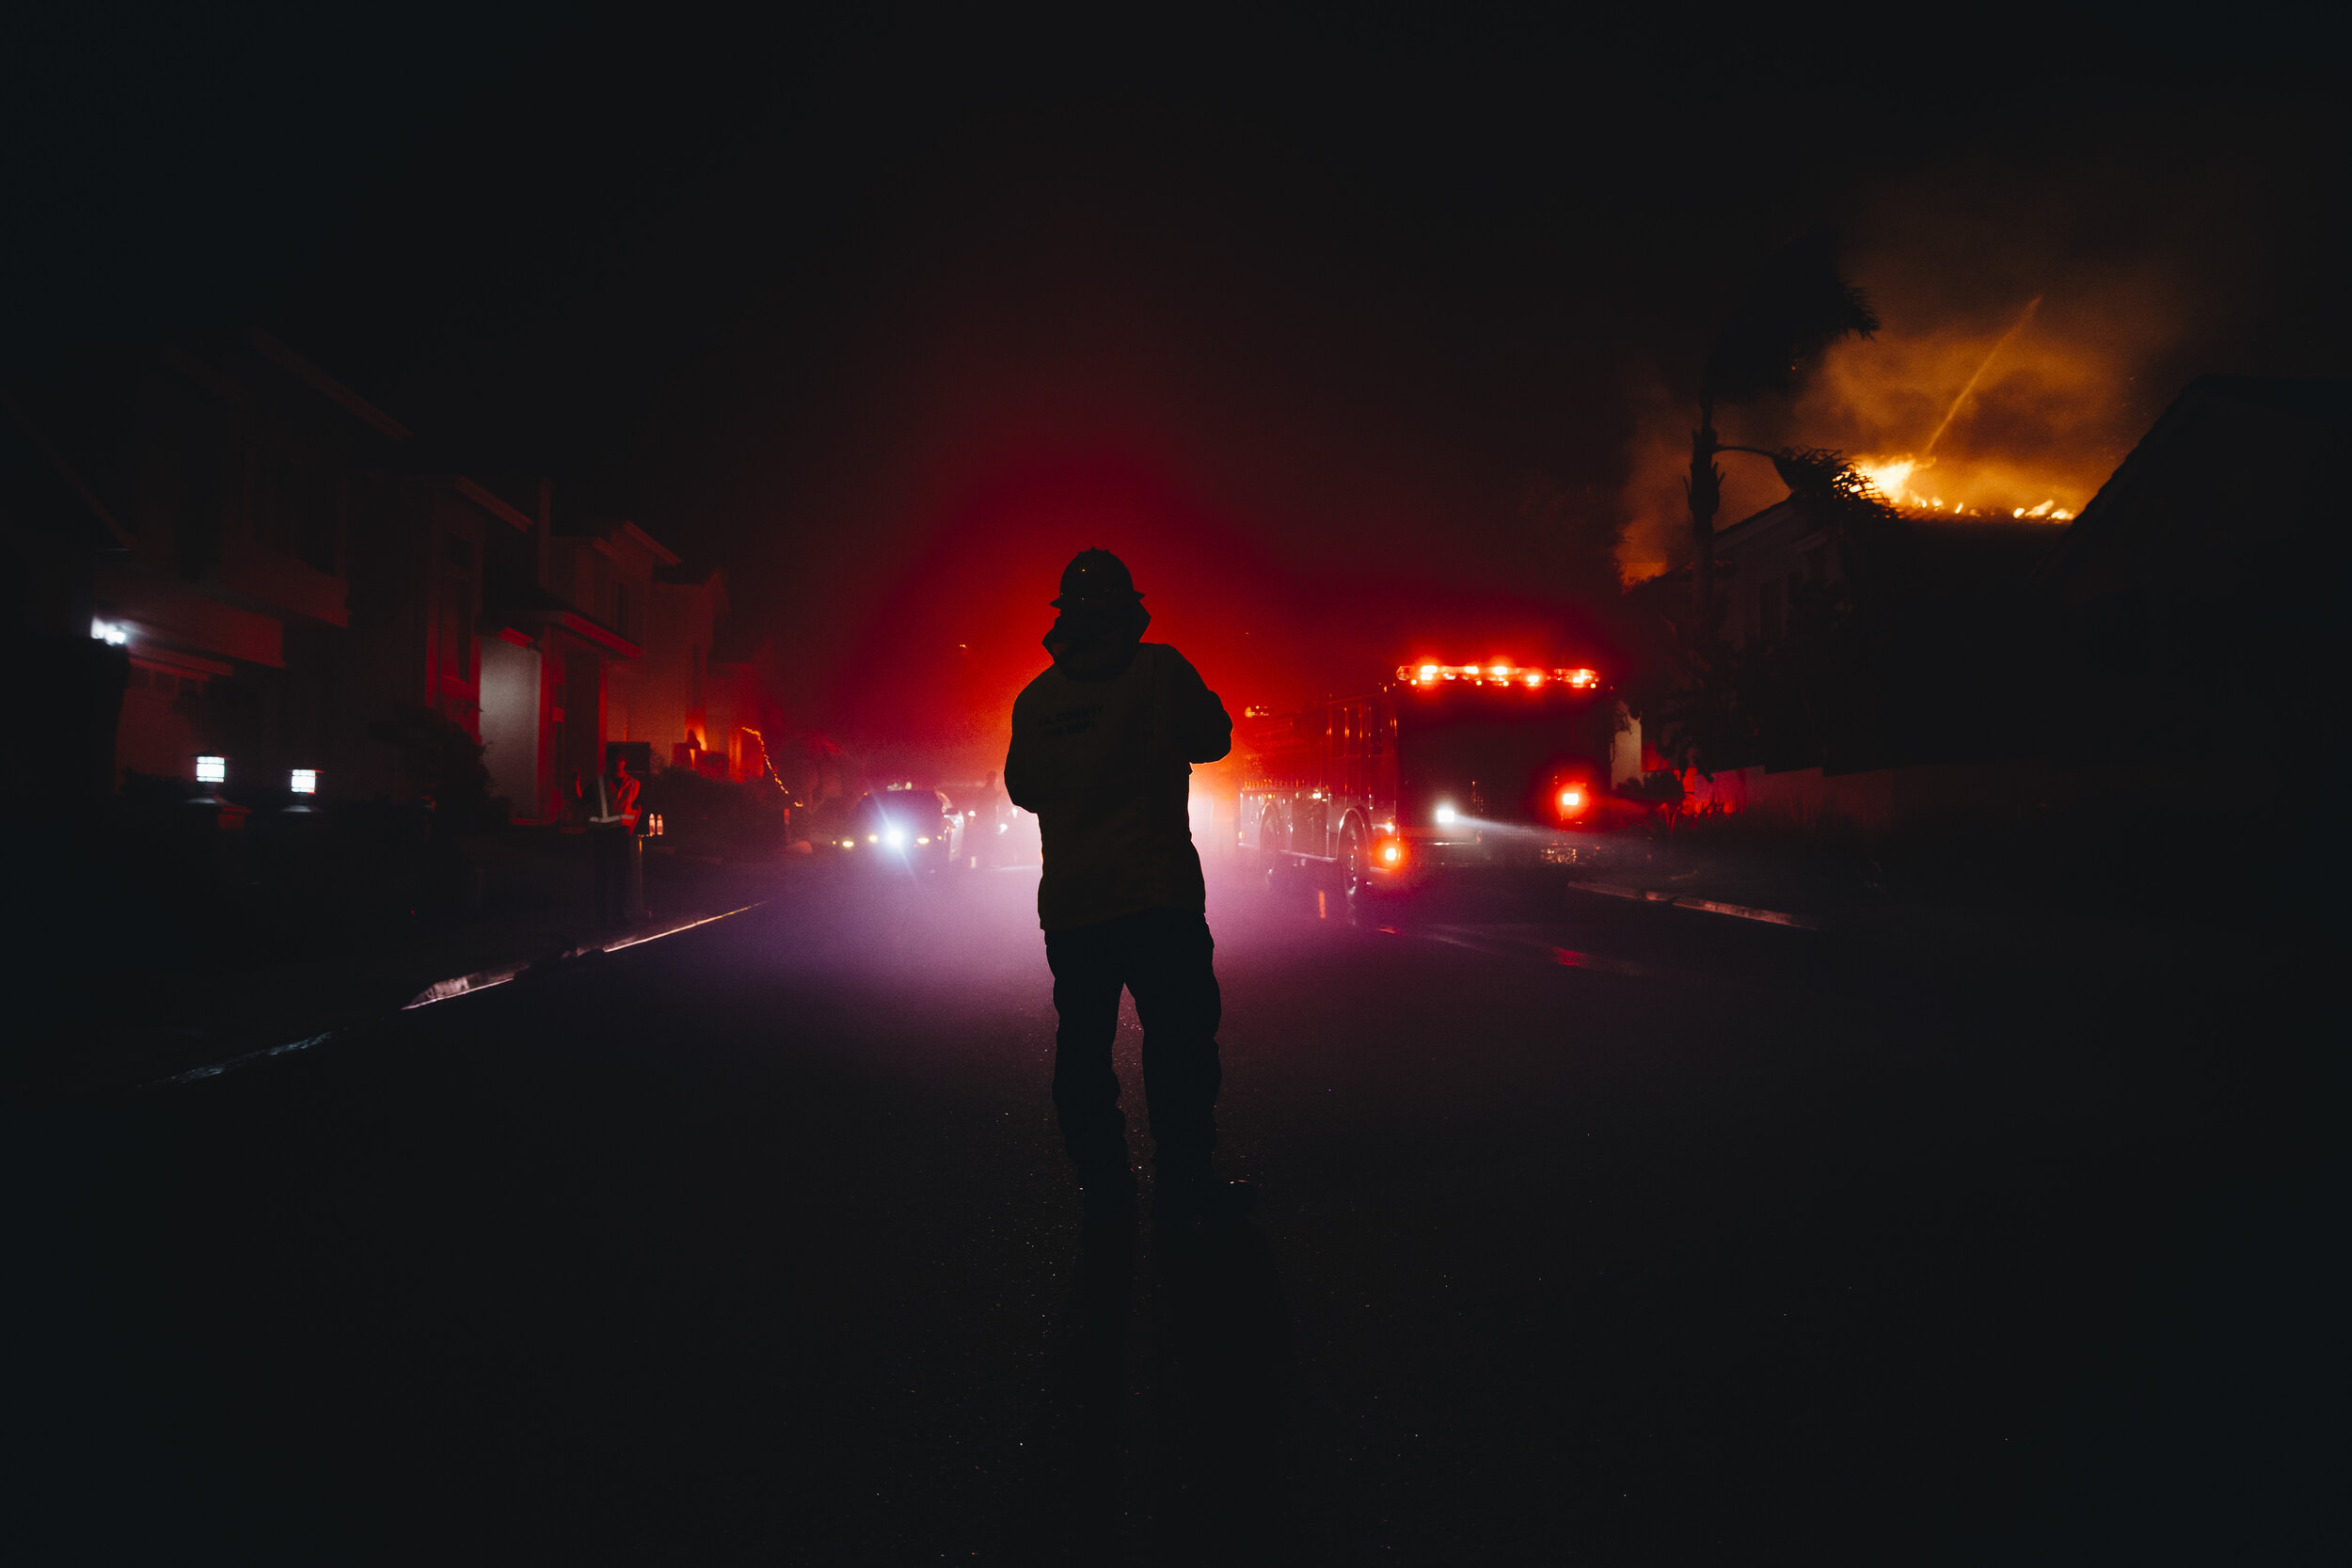   Woolsey Fire, Thousand Oaks, CA. 2018  